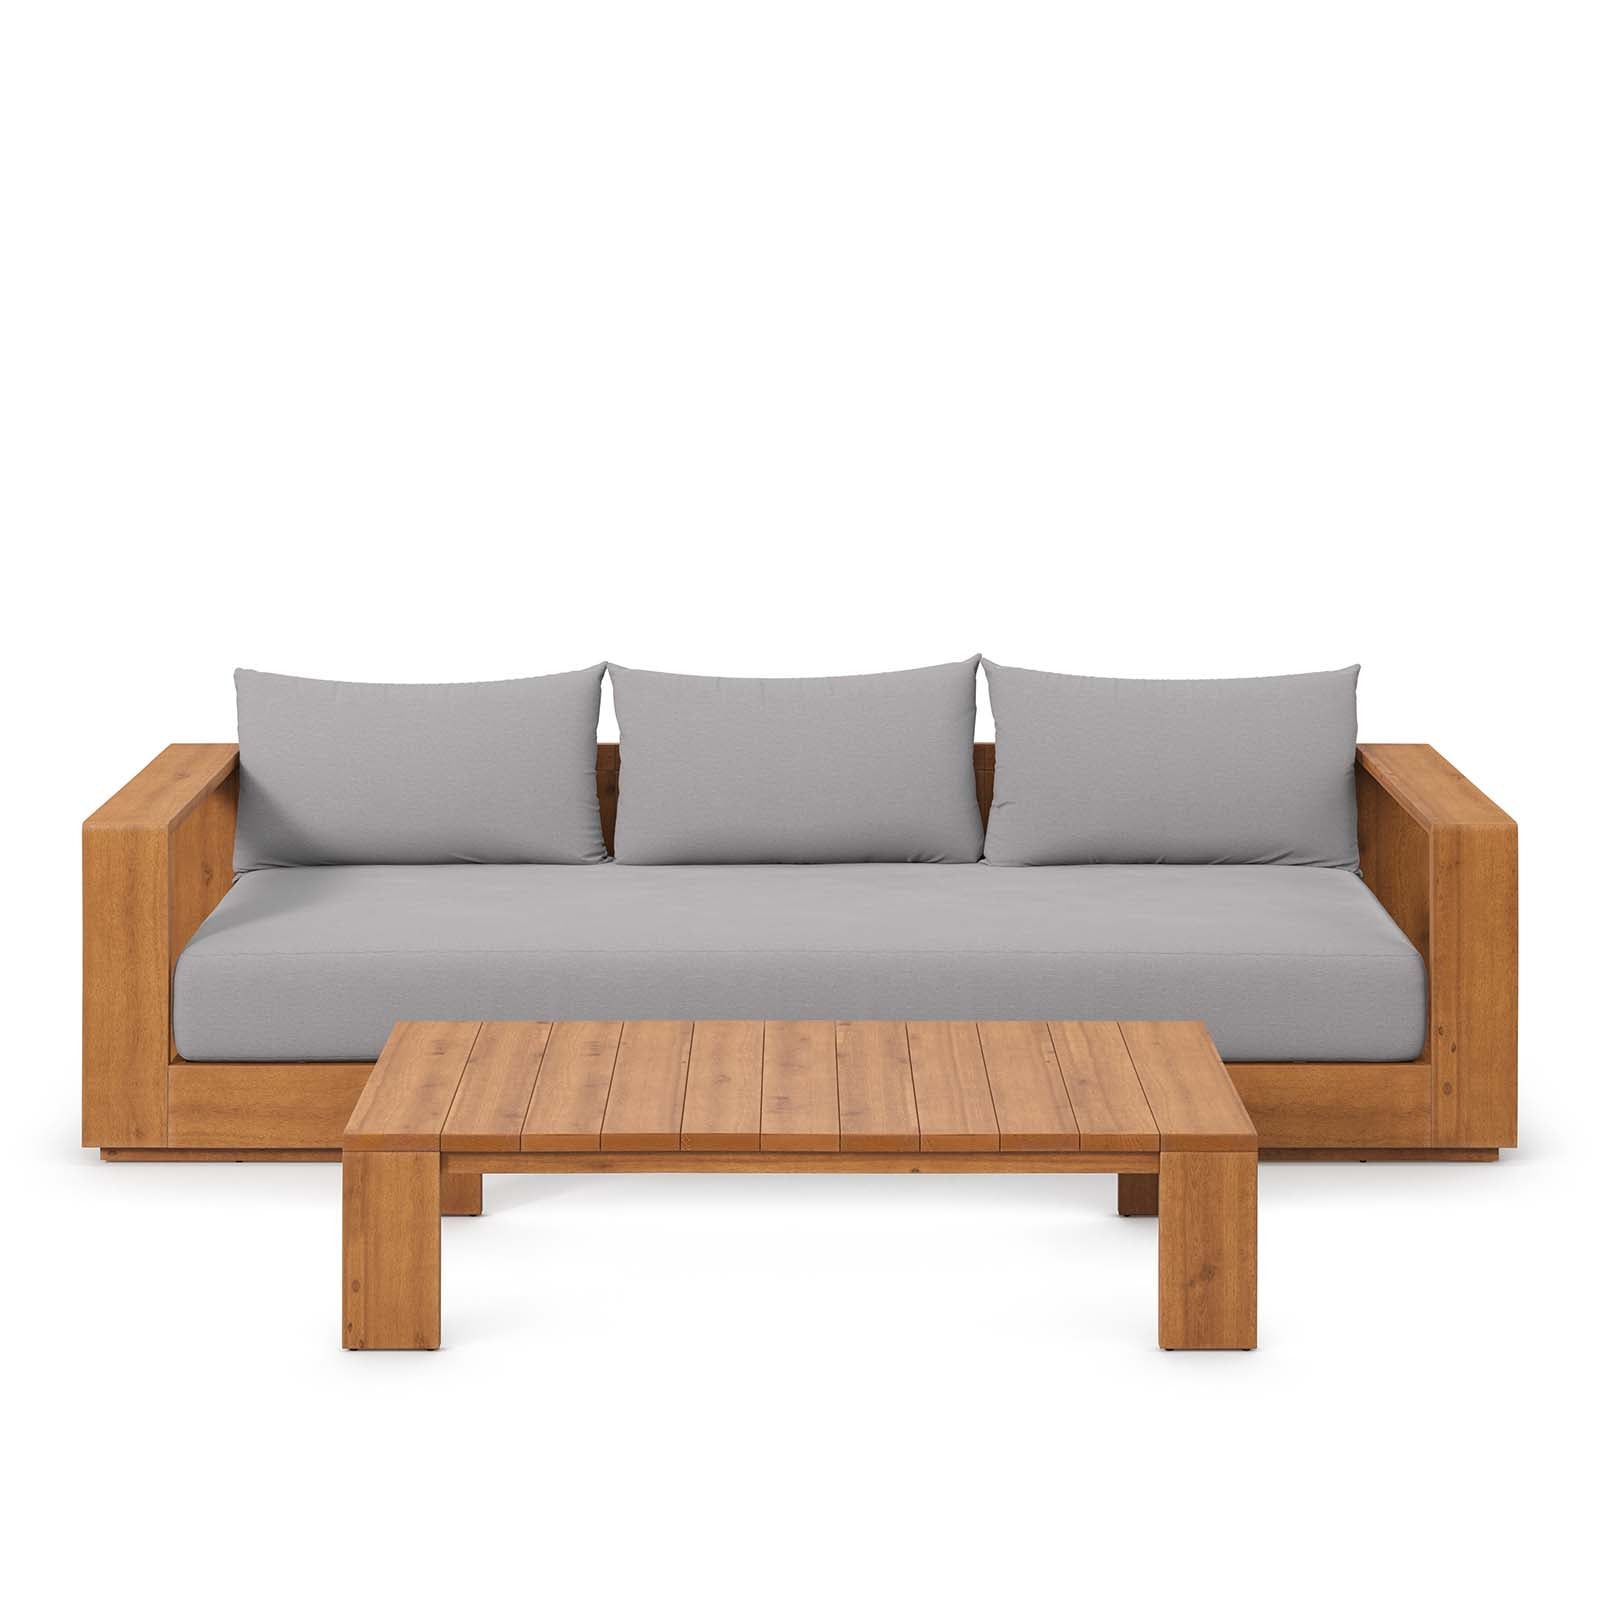 Tahoe Outdoor Patio Acacia Wood 2-Piece Sofa and Coffee Table Set - East Shore Modern Home Furnishings